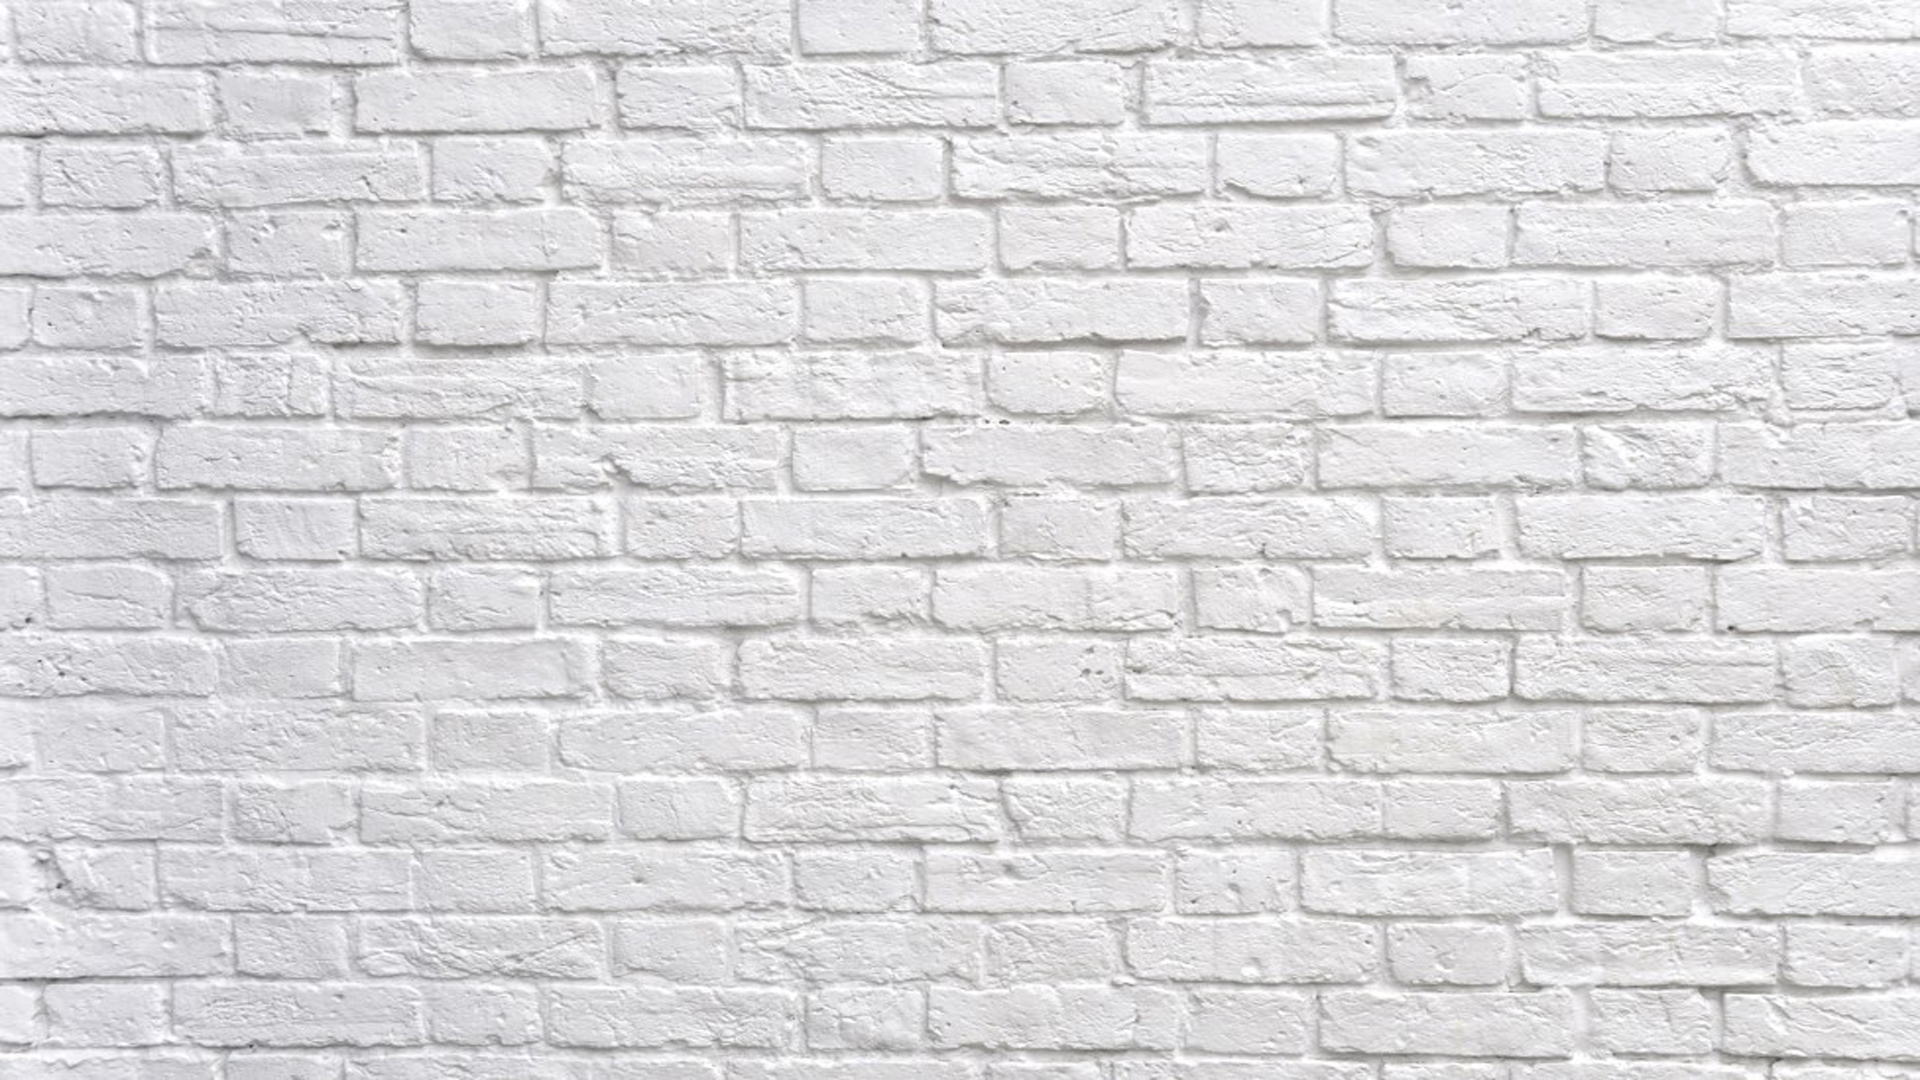 Black And White Brick Wall Background White Brick Wall Image Decoration Picture White Brick Wall 976x6431 Knock Knock